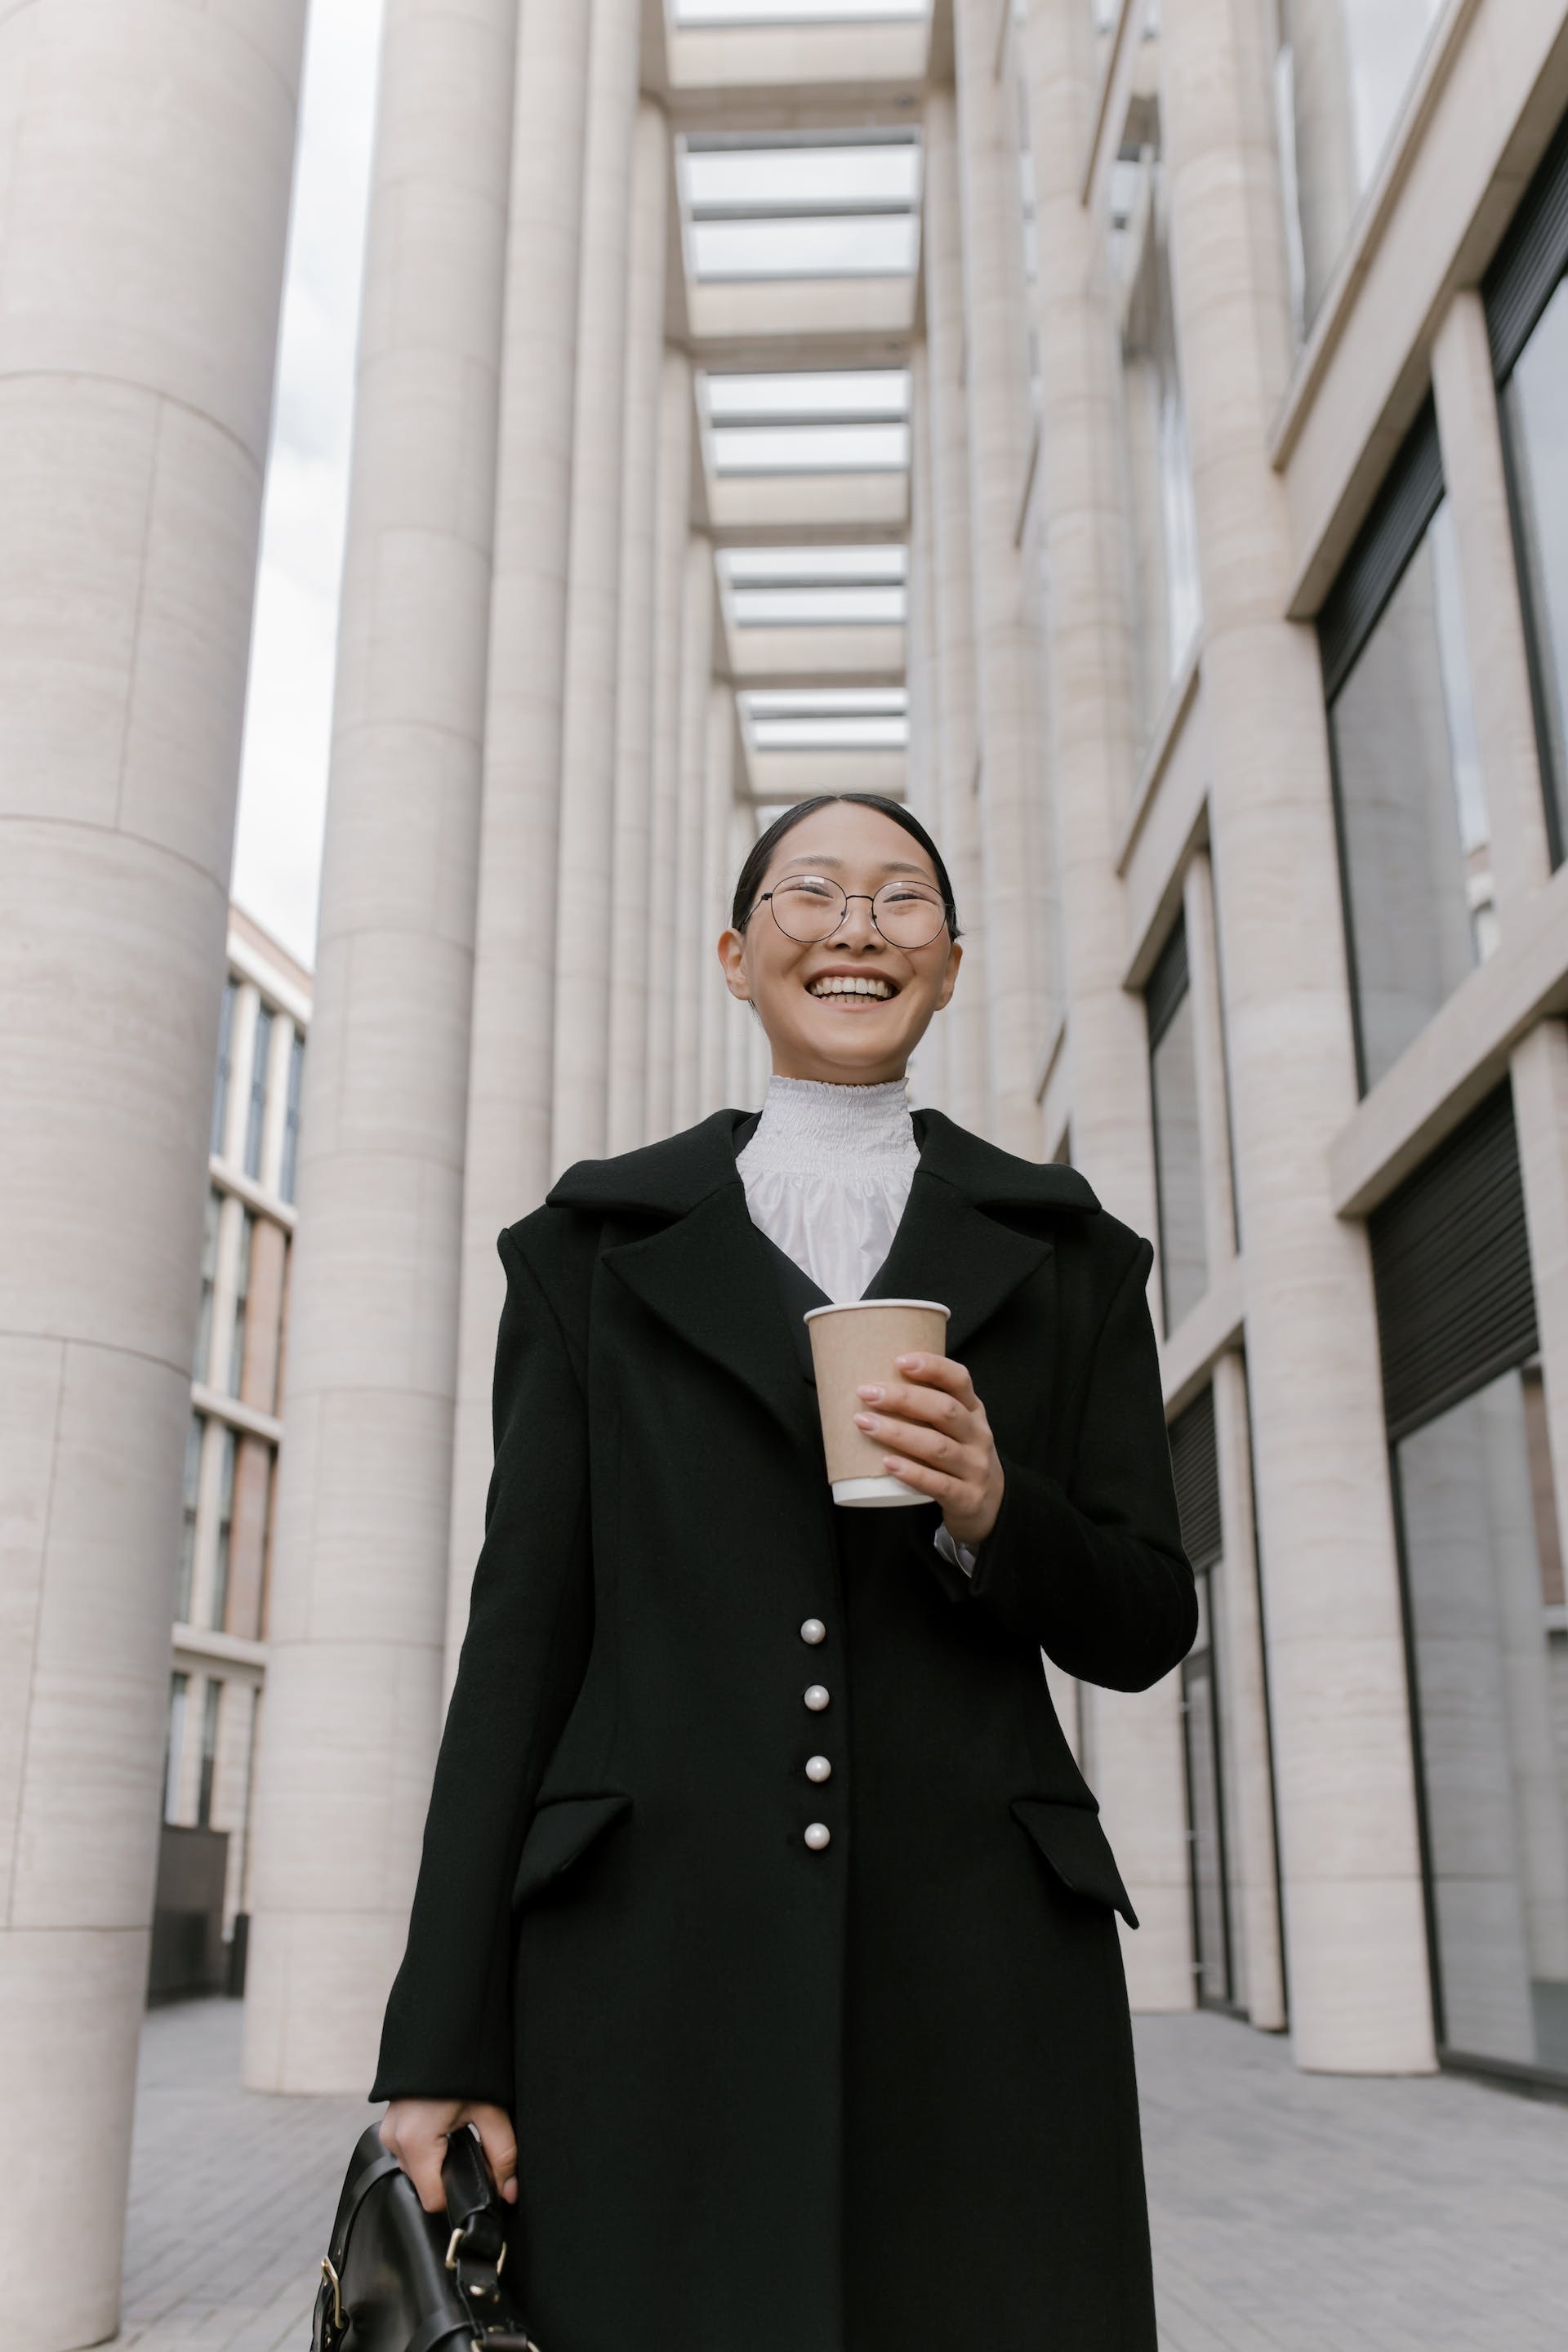 Neatly dressed woman smiling as she holds a coffee mug